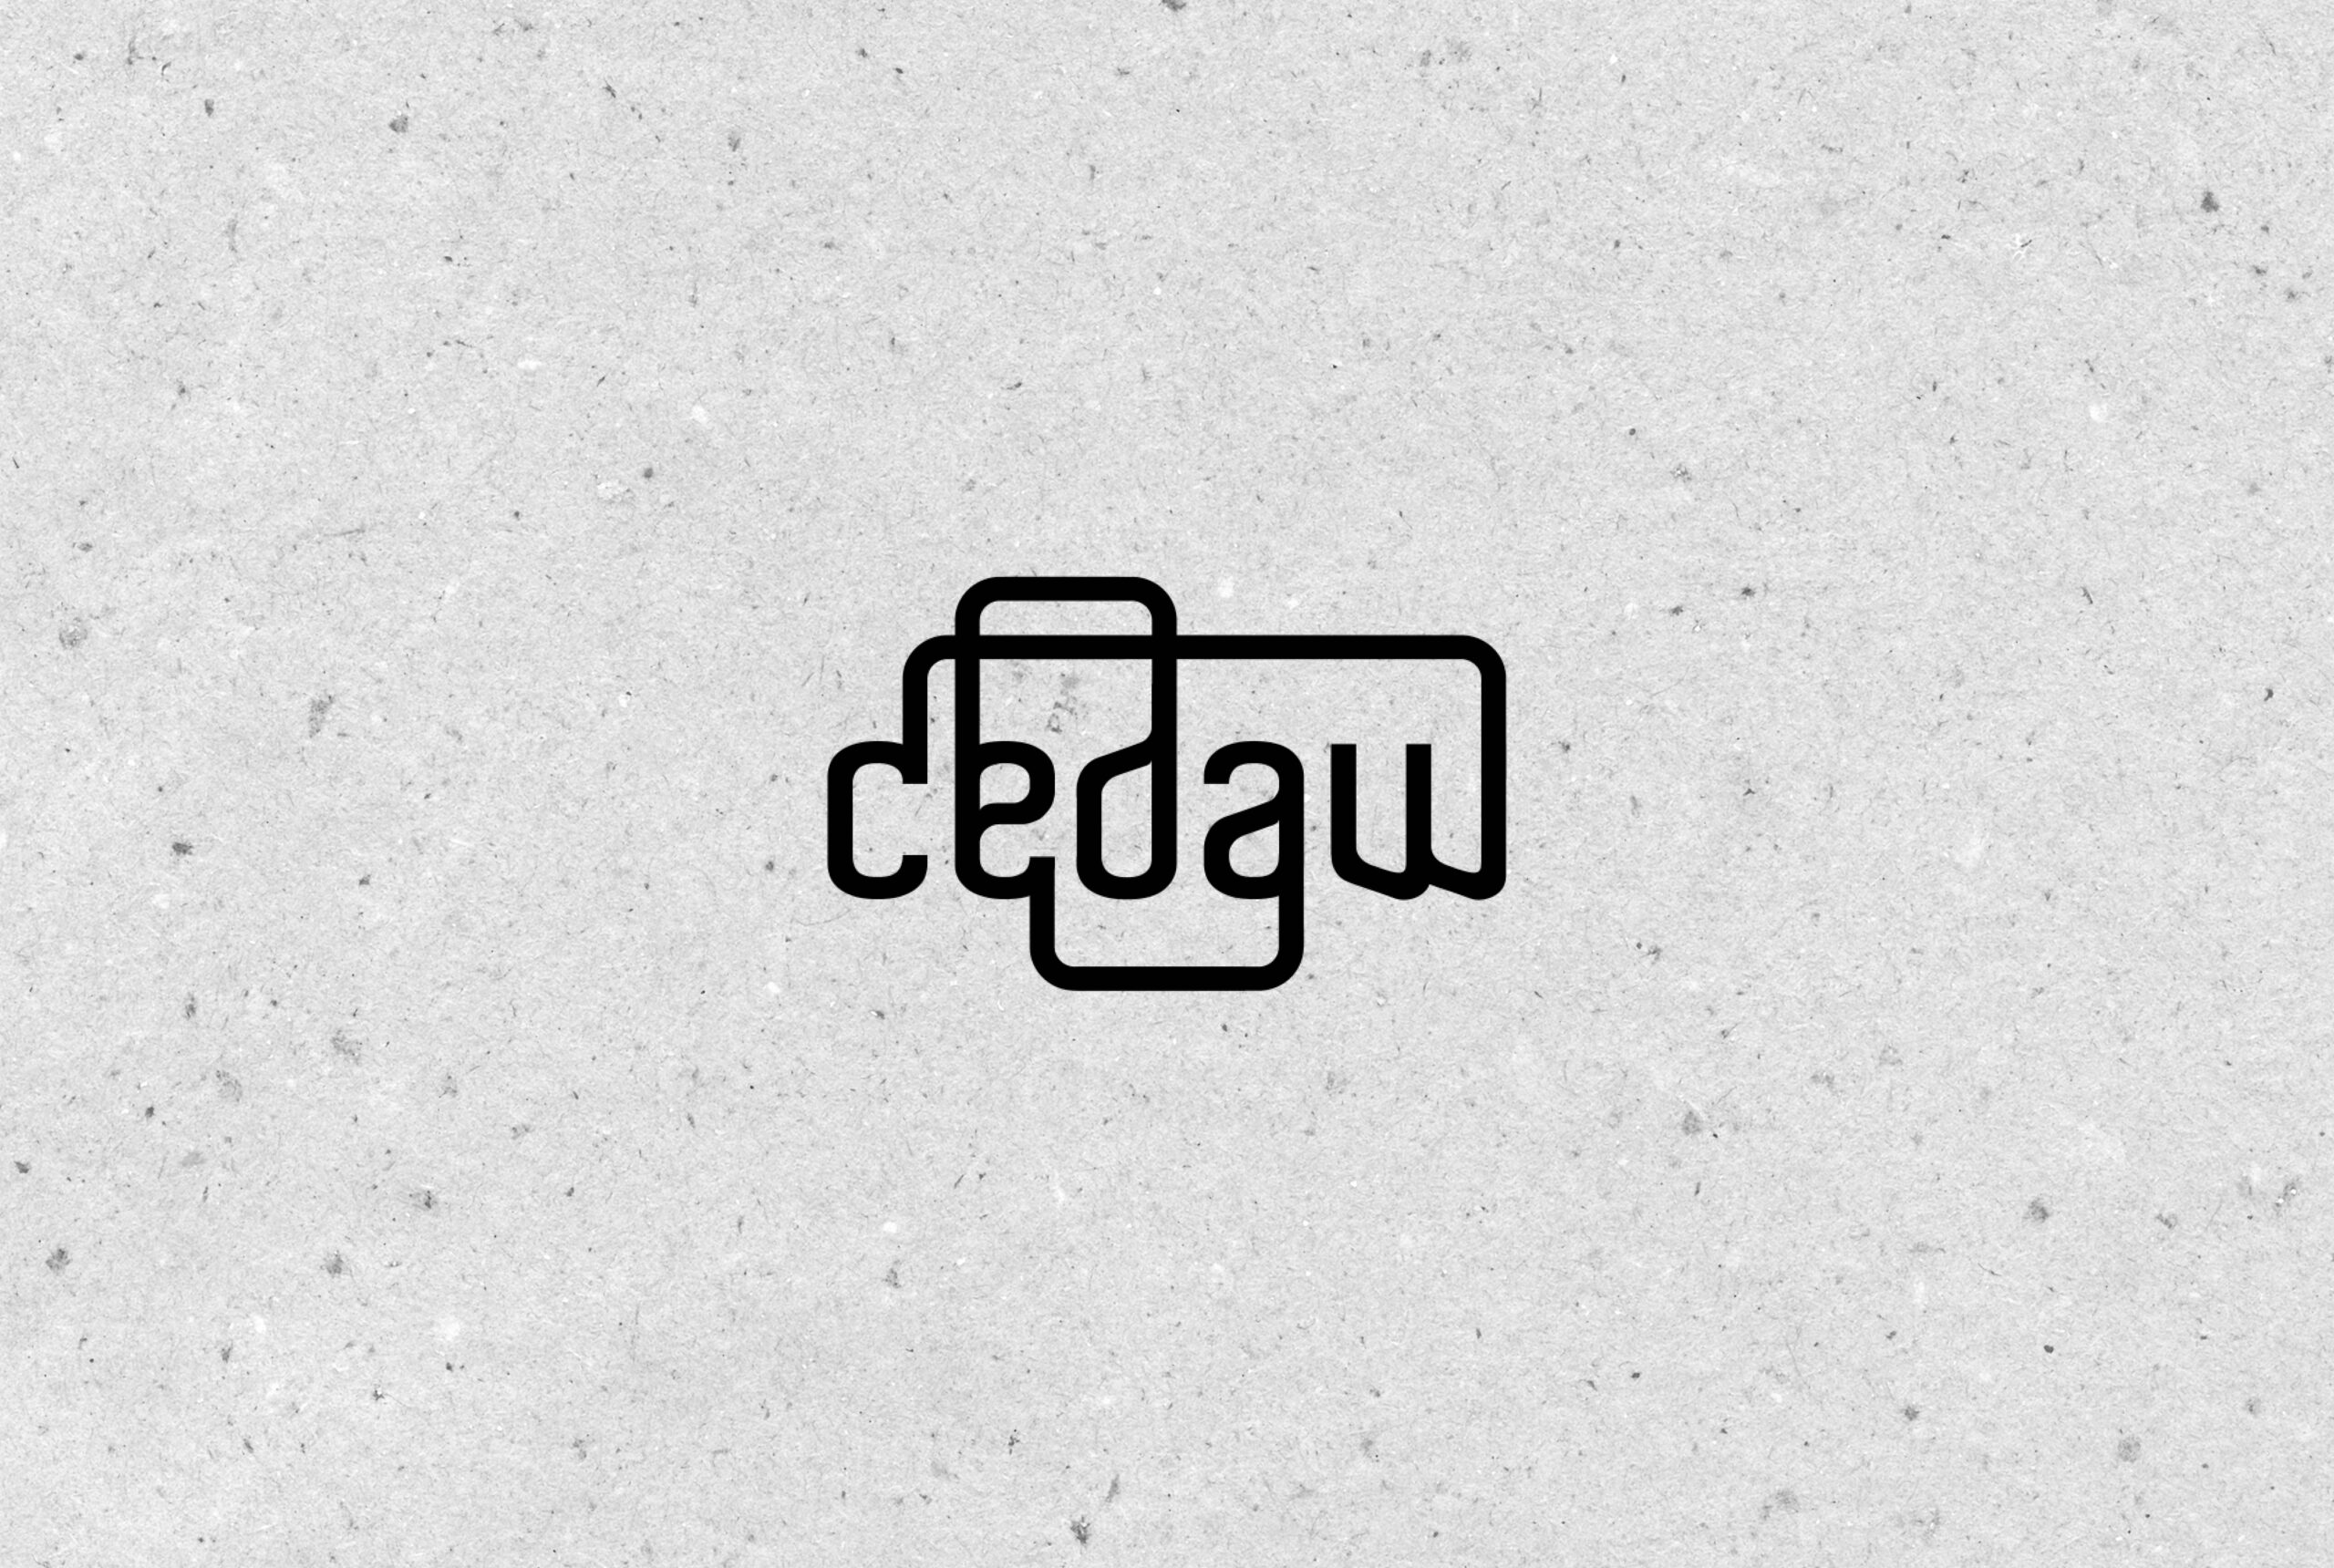 Cedaw